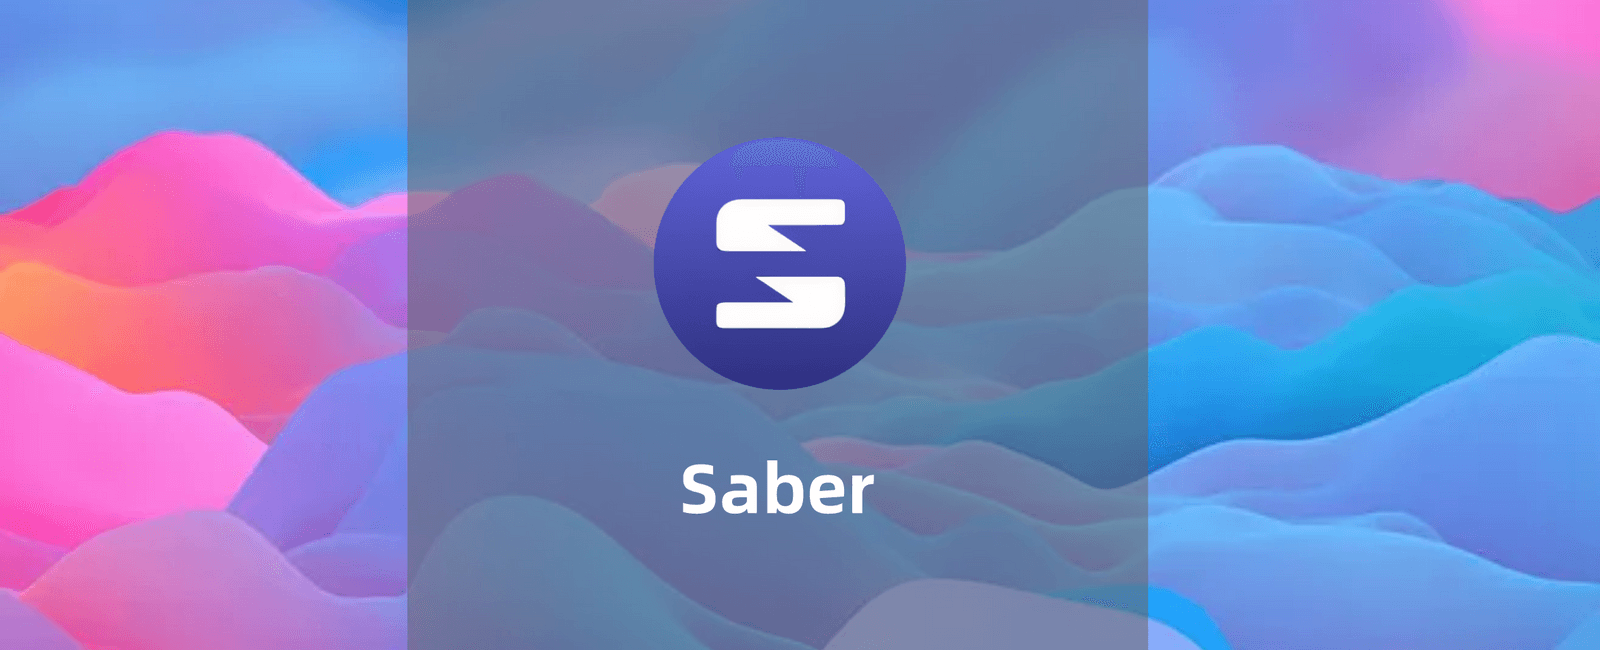 Saber攻略：在Saber上，如何操作多组合挖矿赚取高收益？